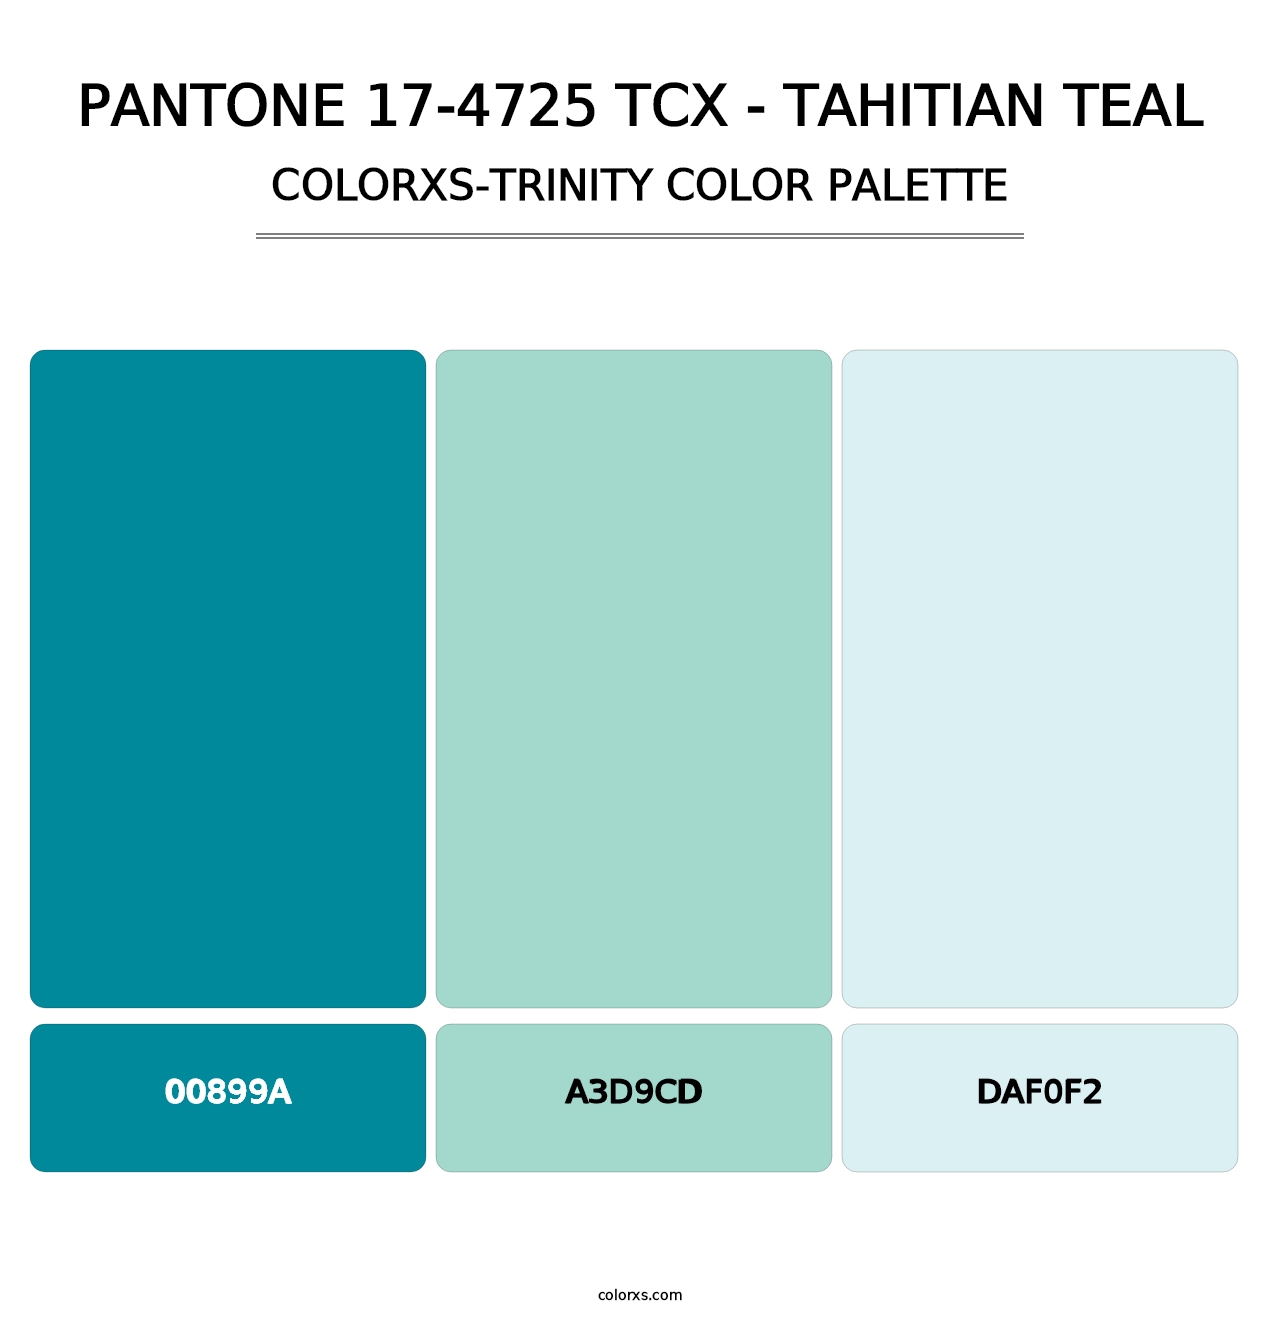 PANTONE 17-4725 TCX - Tahitian Teal - Colorxs Trinity Palette